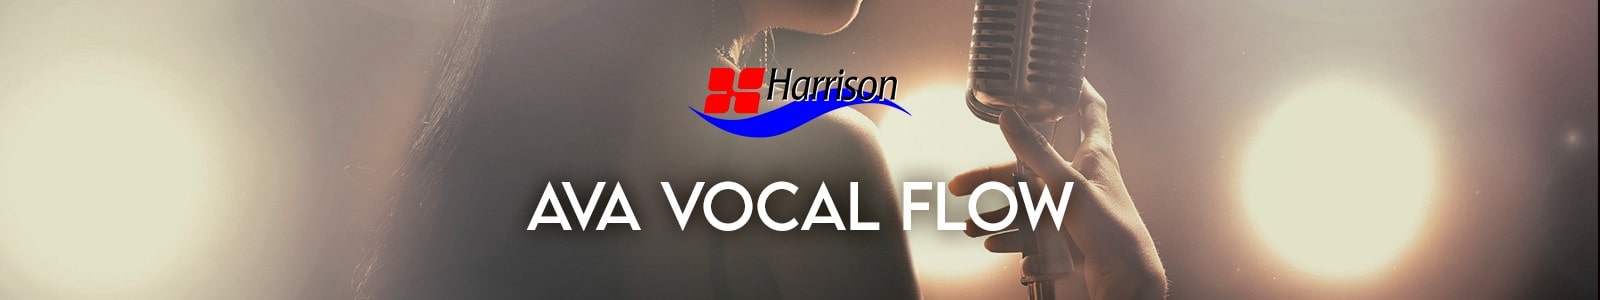 Harrison AVA Vocal Flow